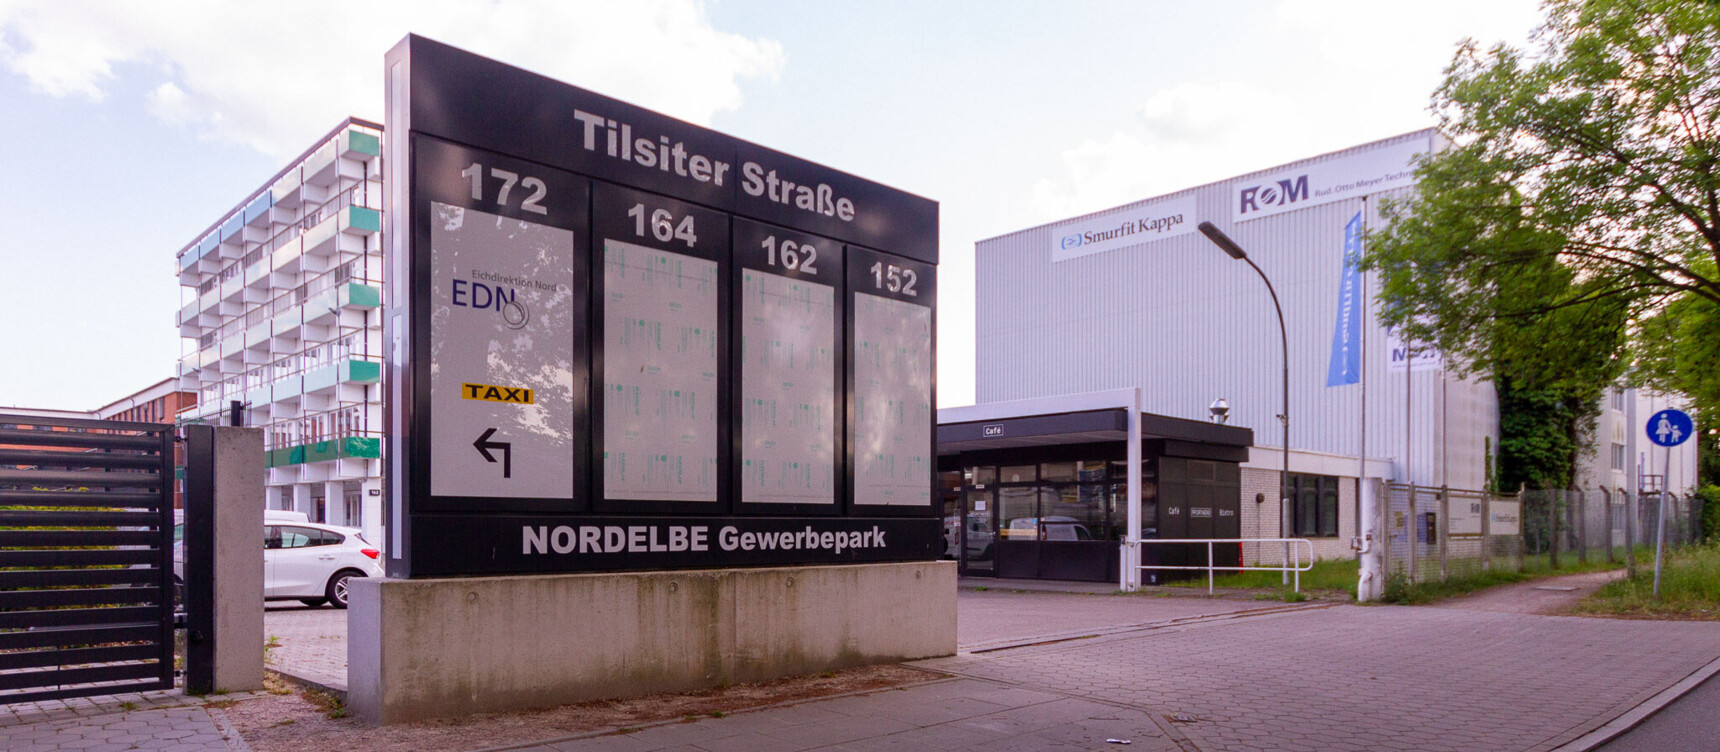 Tilsiter Strasse 152 bsi 172 in the industrial area Friedrich-Ebert-Damm